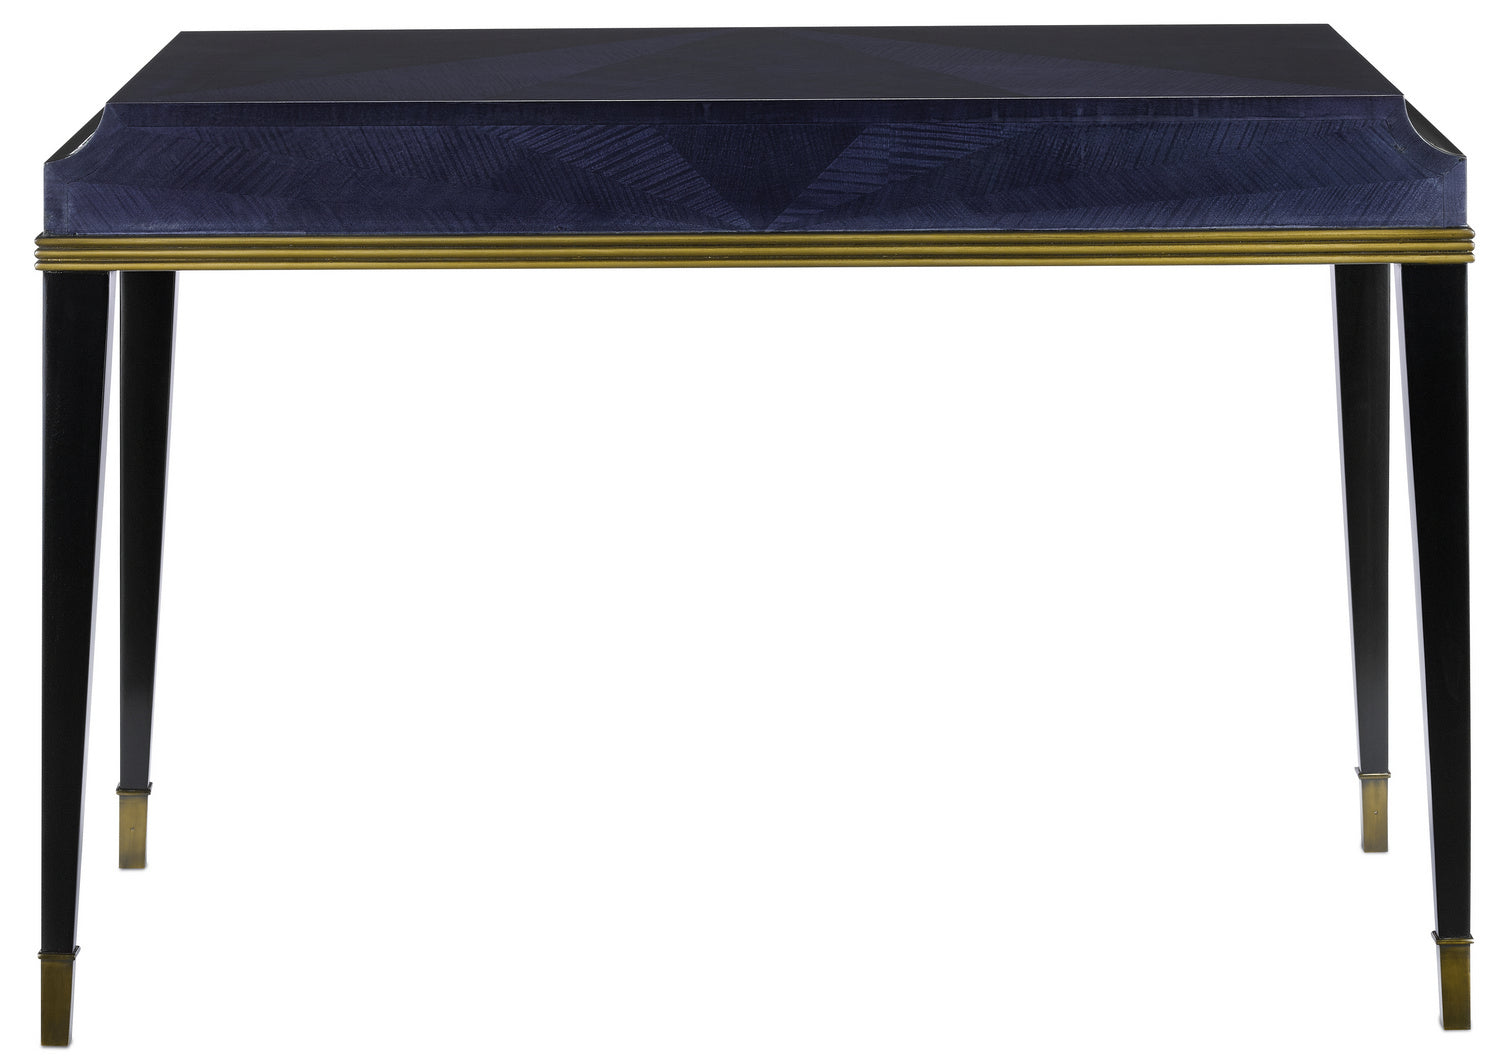 Desk from the Kallista collection in Dark Sapphire/Caviar Black/Antique Brass finish